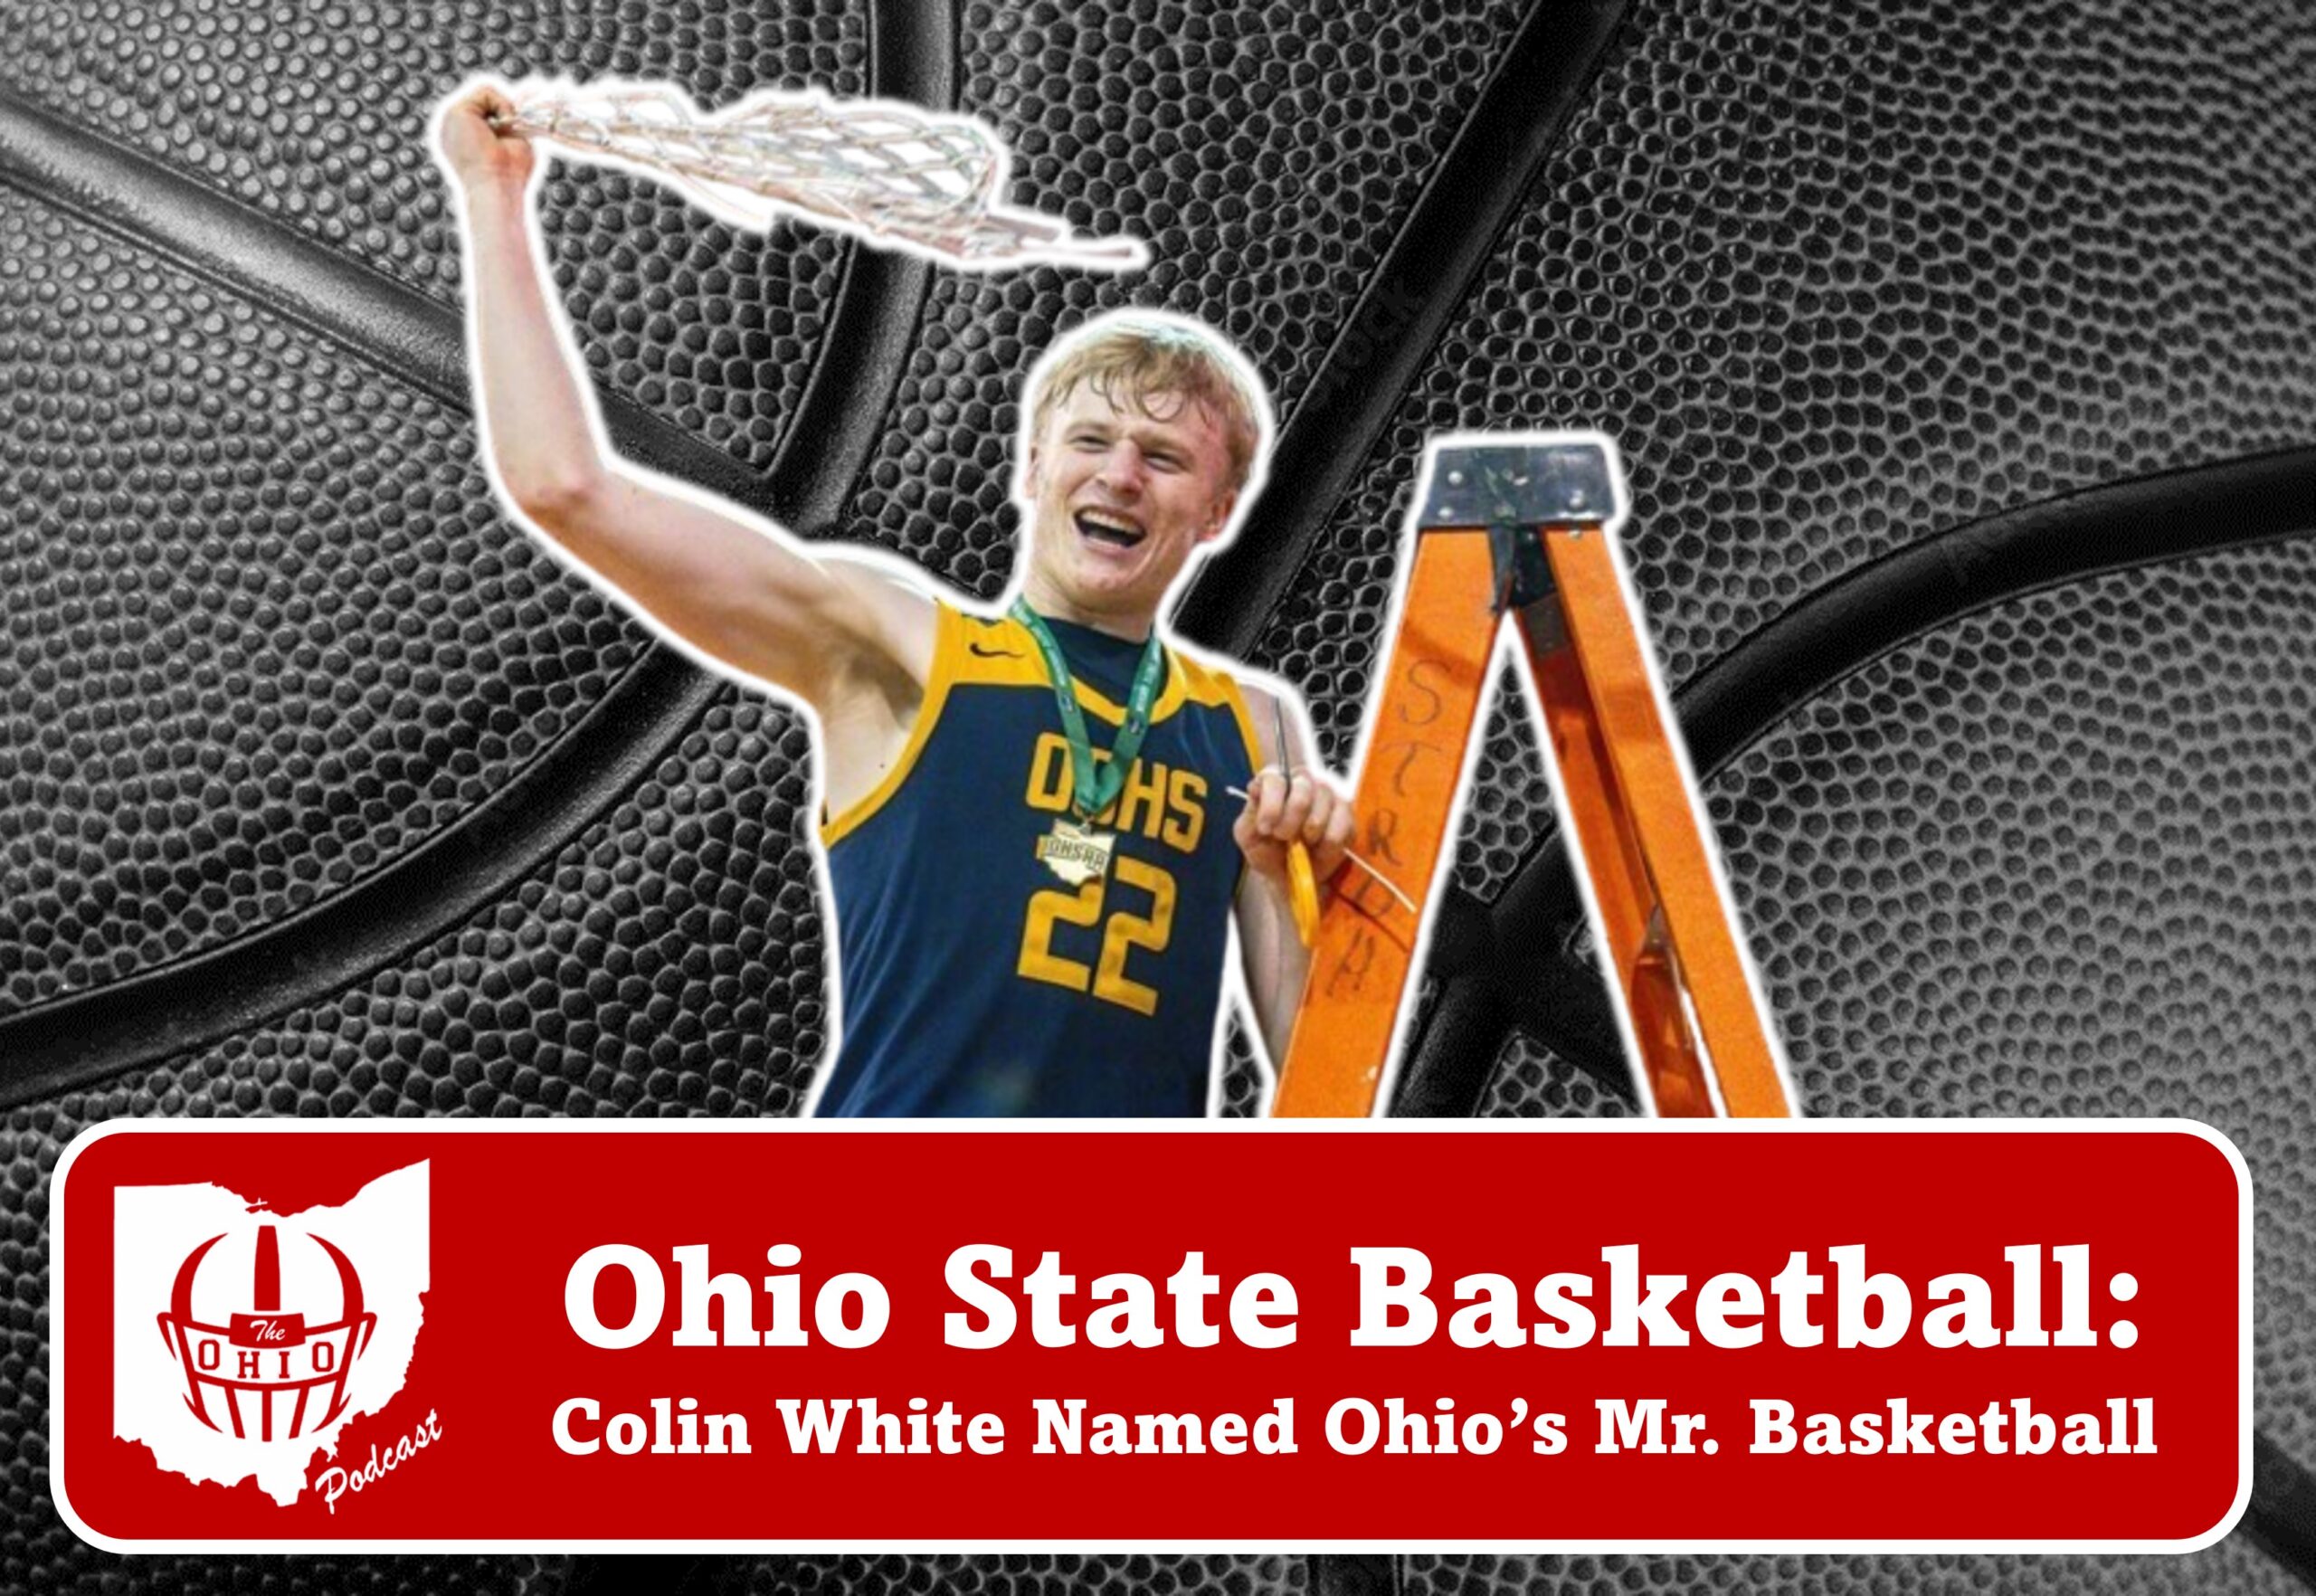 Colin White Named Ohio's Mr. Basketball